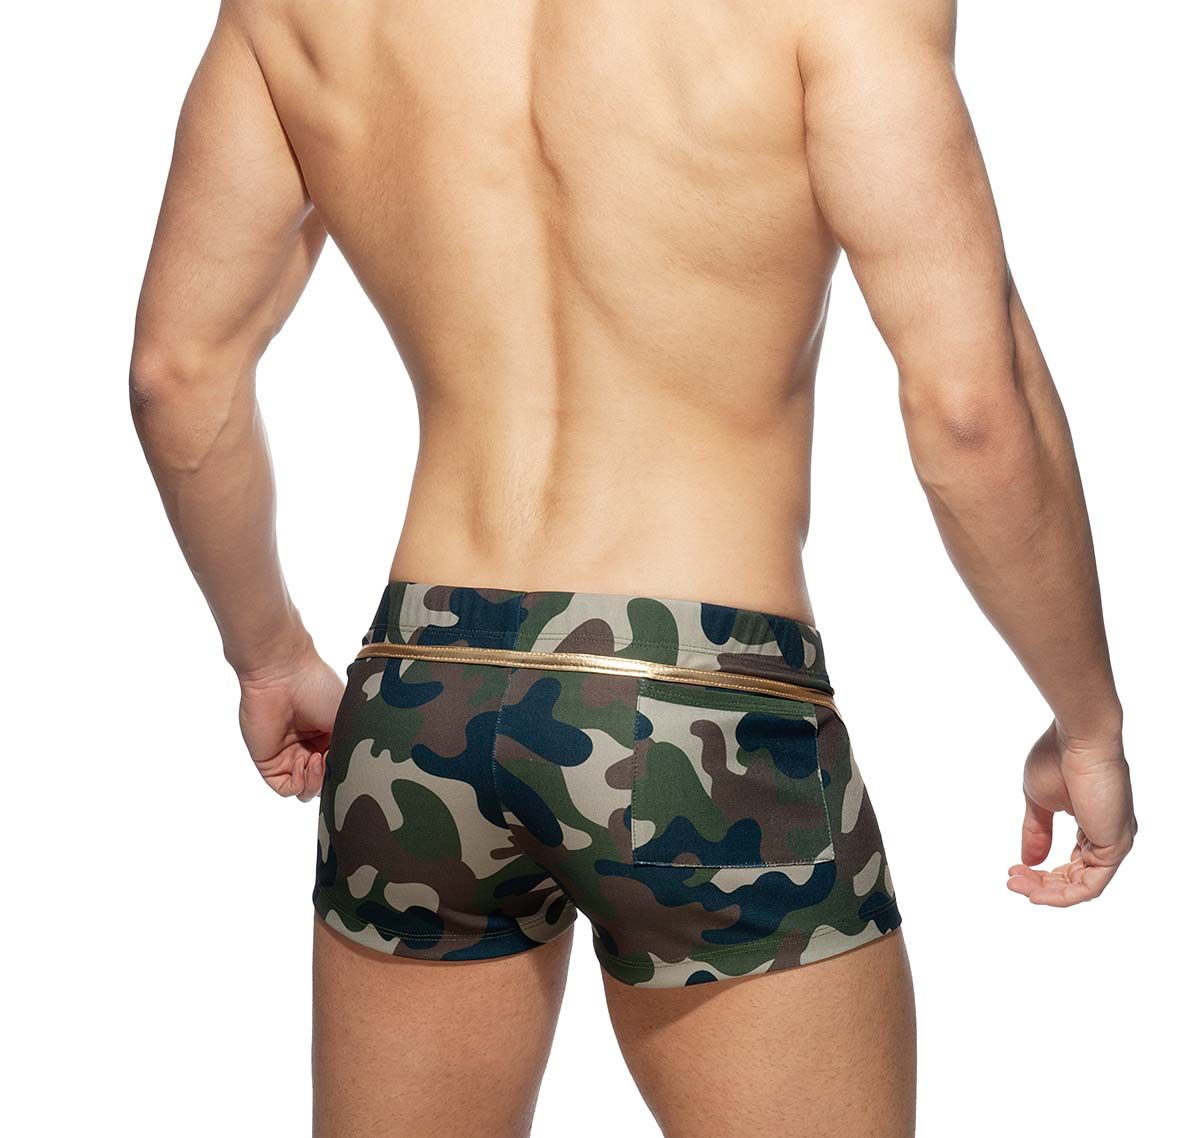 Addicted Training shorts CAMO/GOLD SHORTS AD942, army